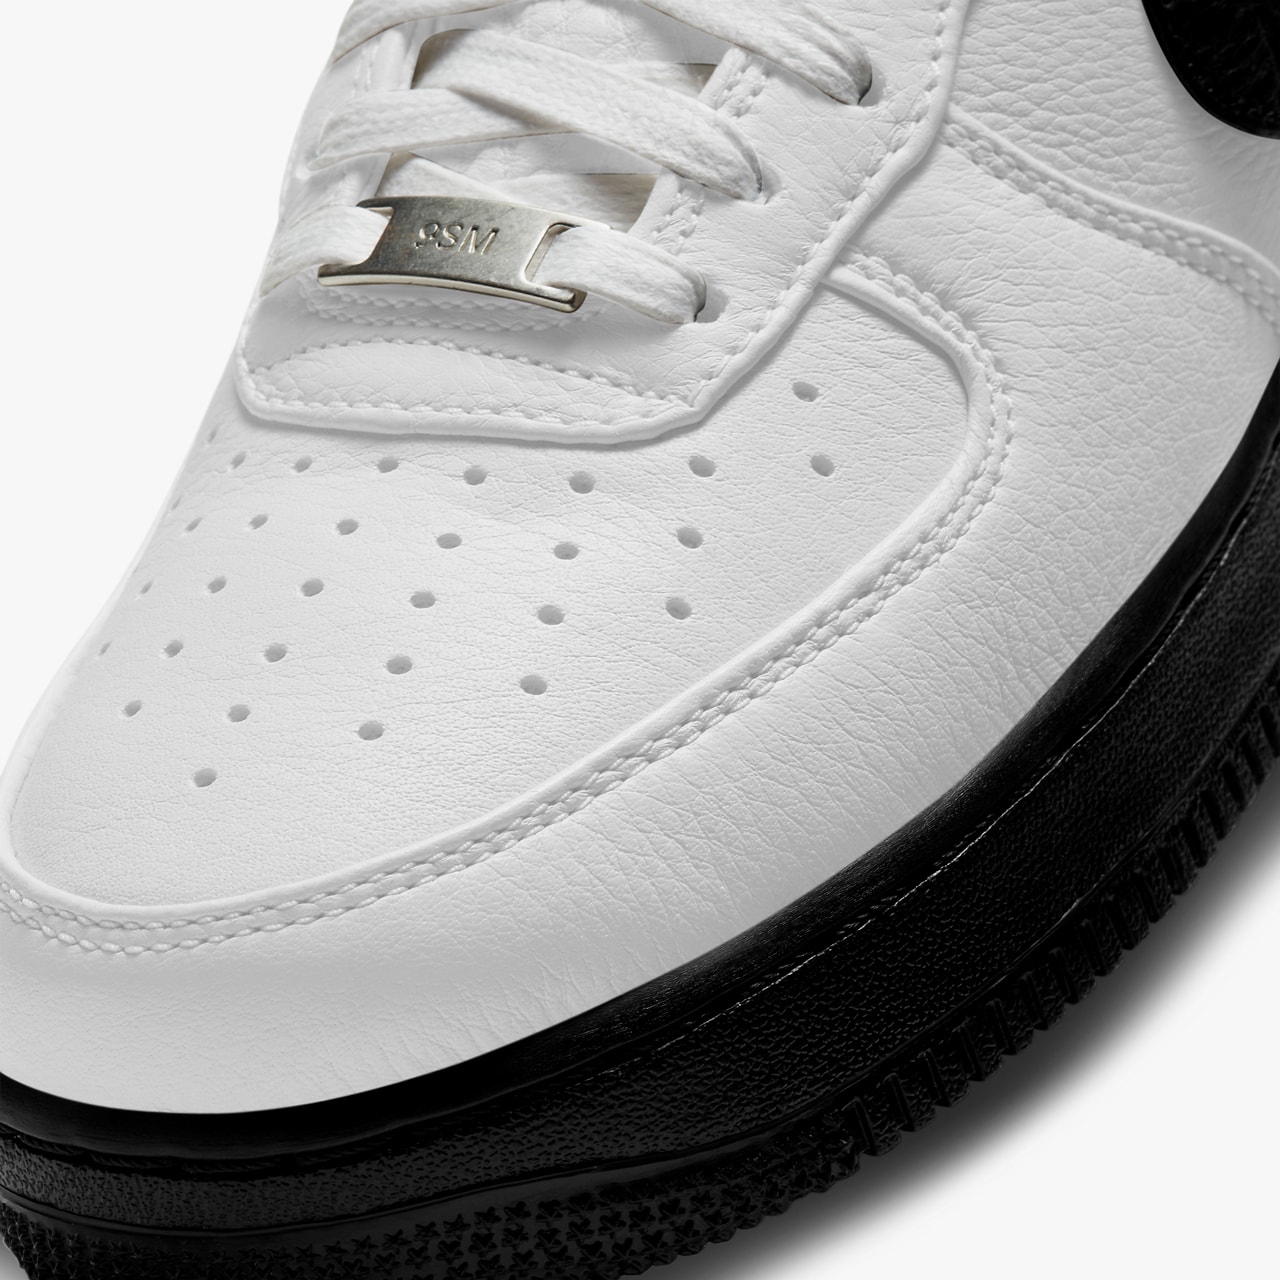 1017 ALYX 9SM Nike Air Force 1 High White black cq4018 101 menswear streetwear Matthew m williams designer shoes kicks trainers runners sneakers hi